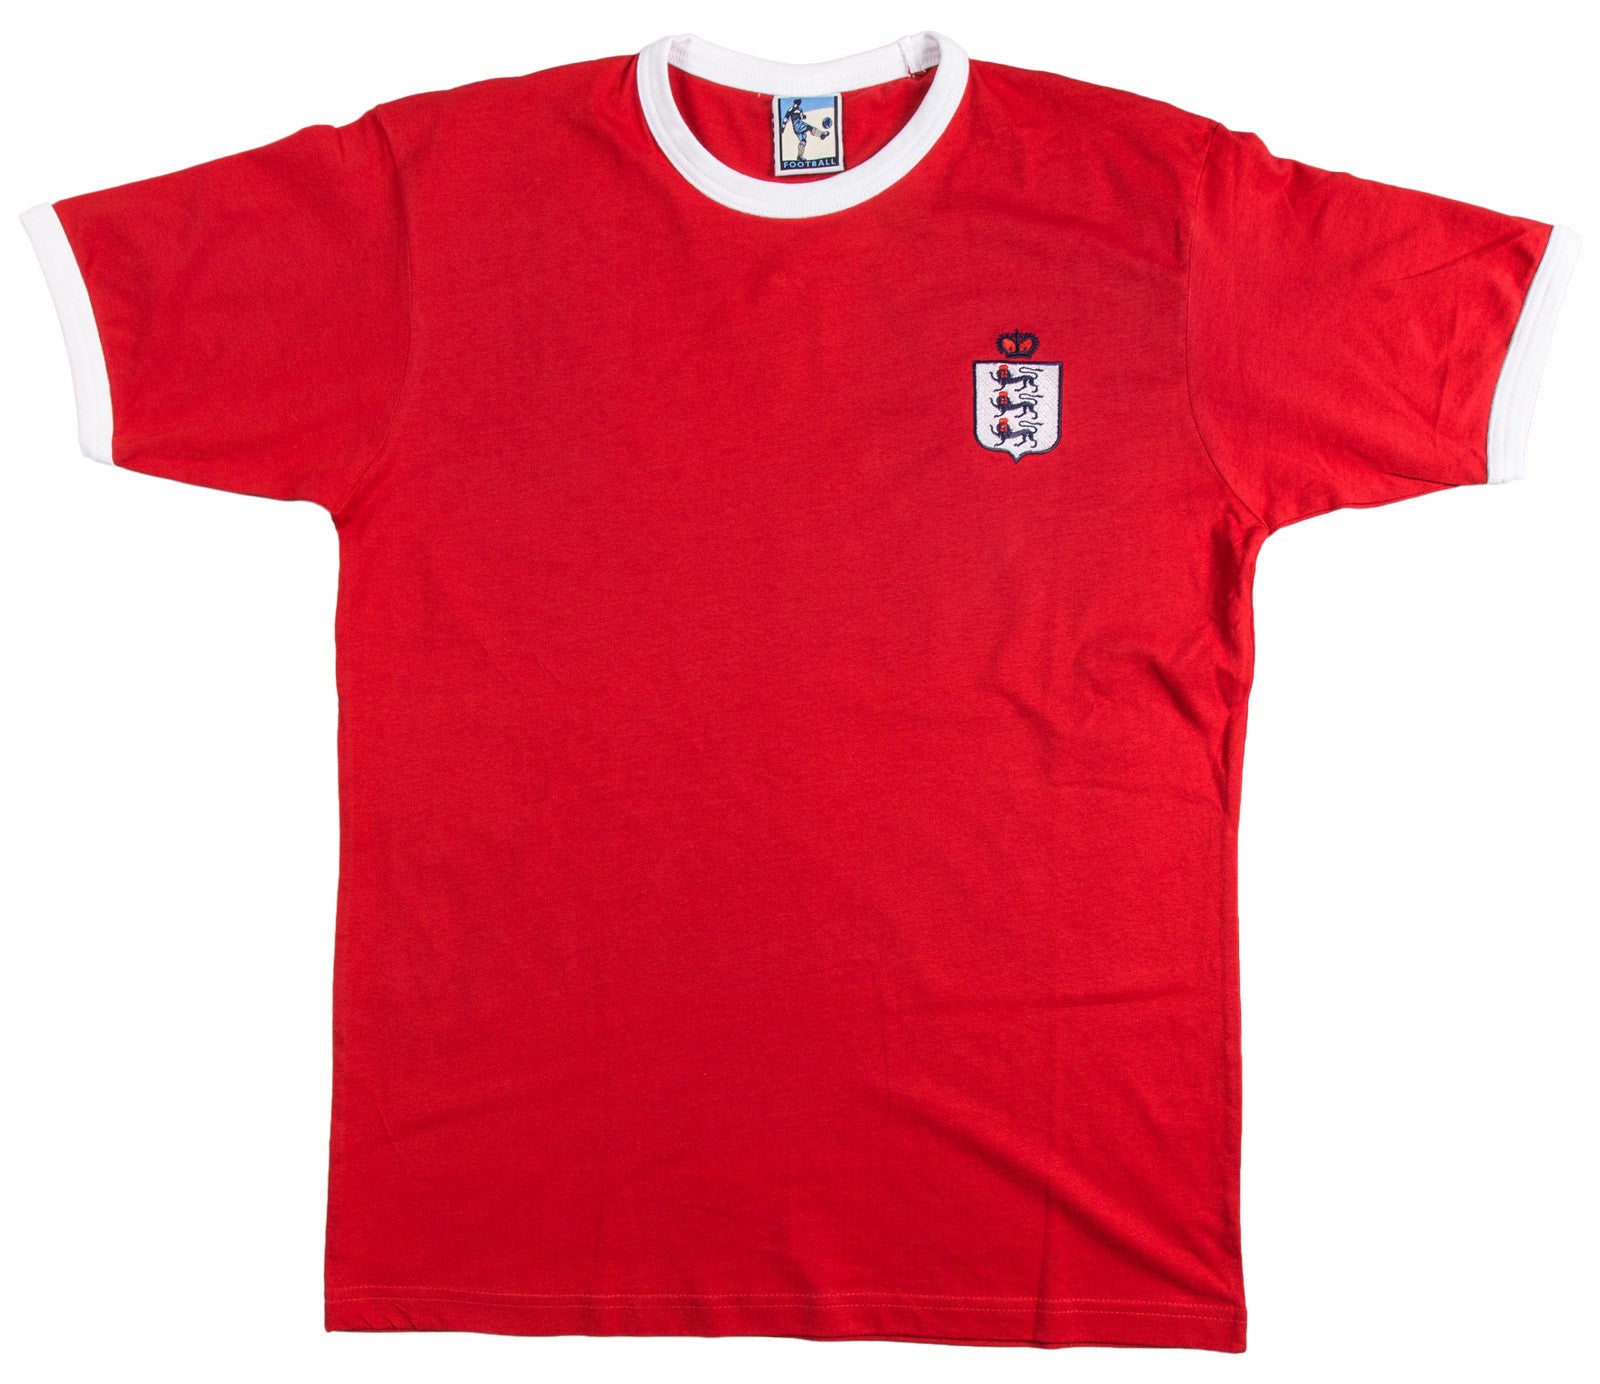 Vintage Football Shirts - Original Retro Football Shirts and Classic  Football Shirts